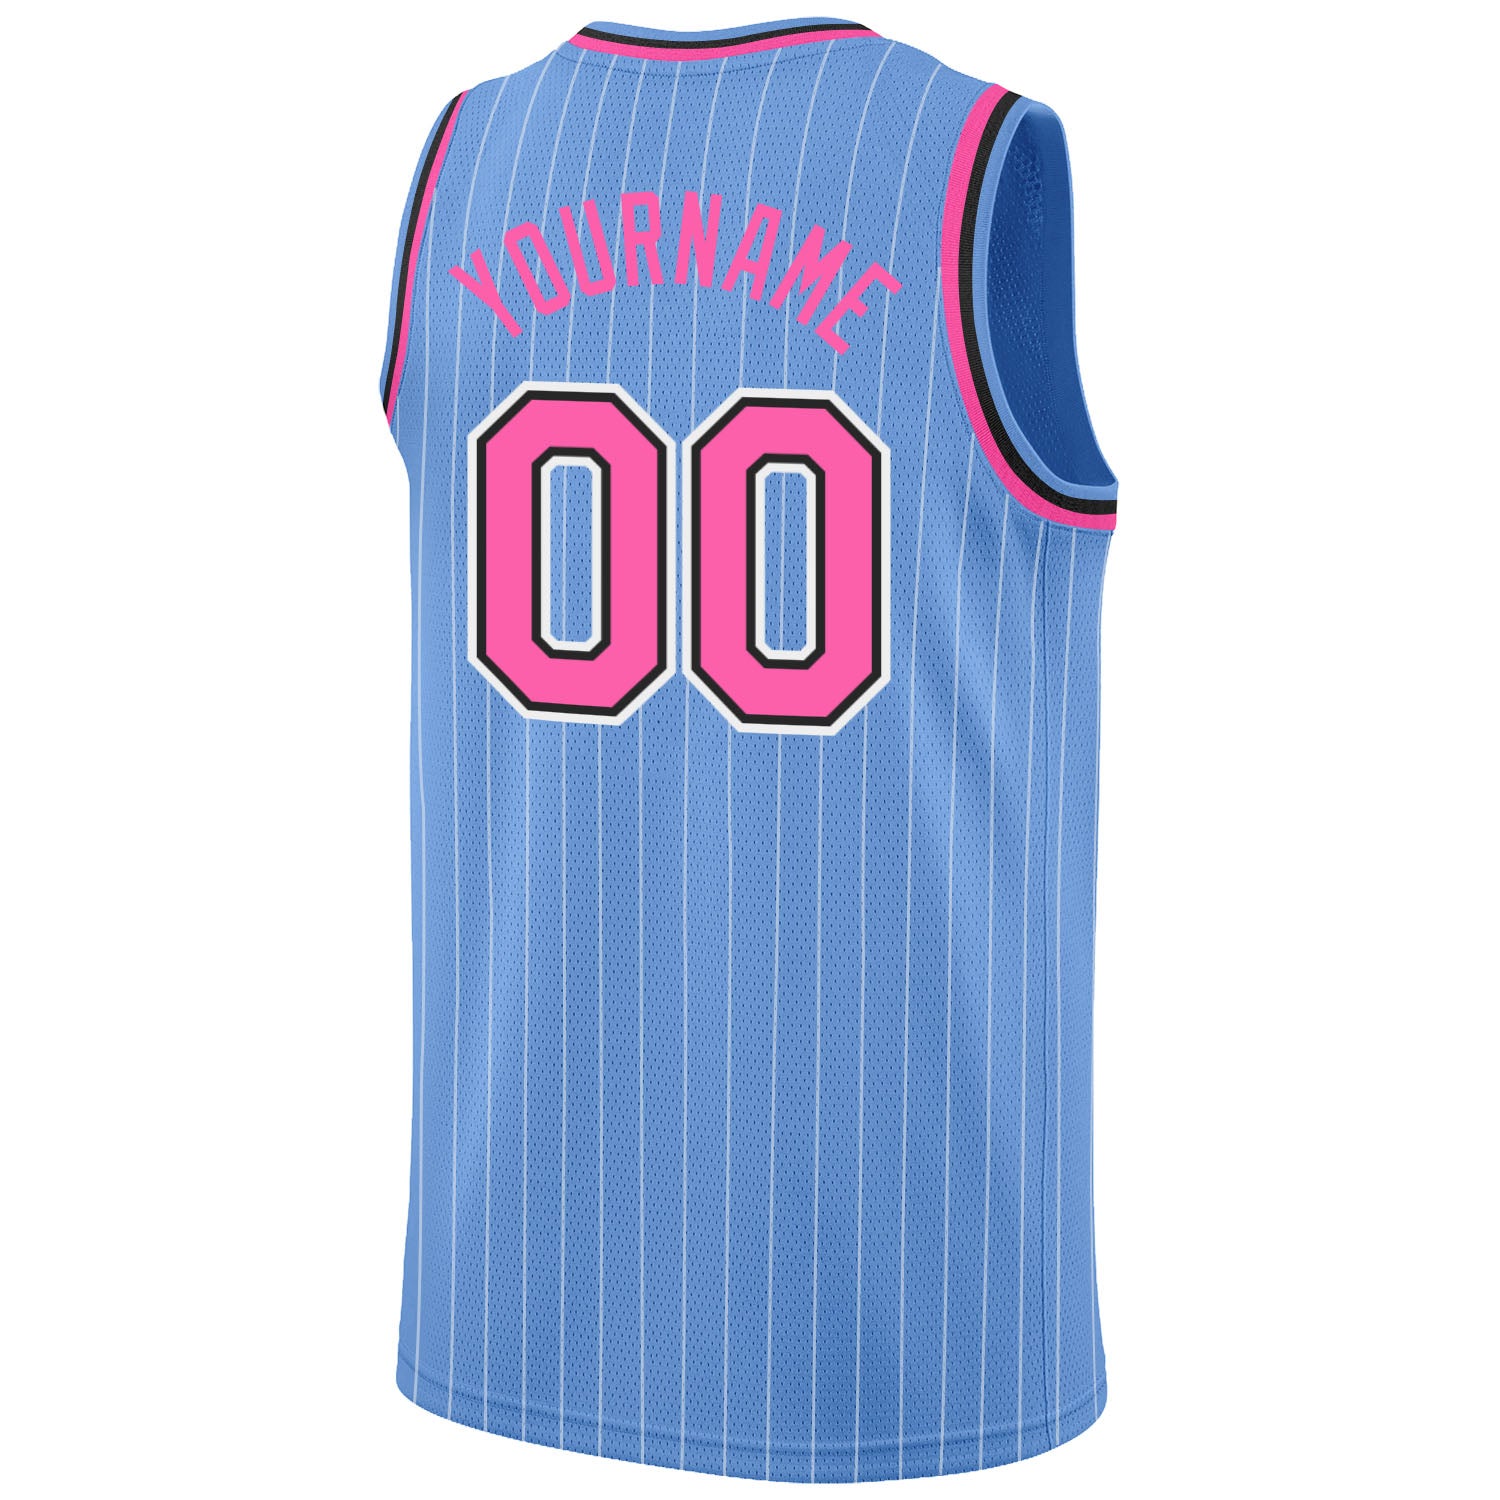 FANSIDEA Custom Light Blue Pink-Black Authentic Throwback Basketball Jersey Men's Size:L